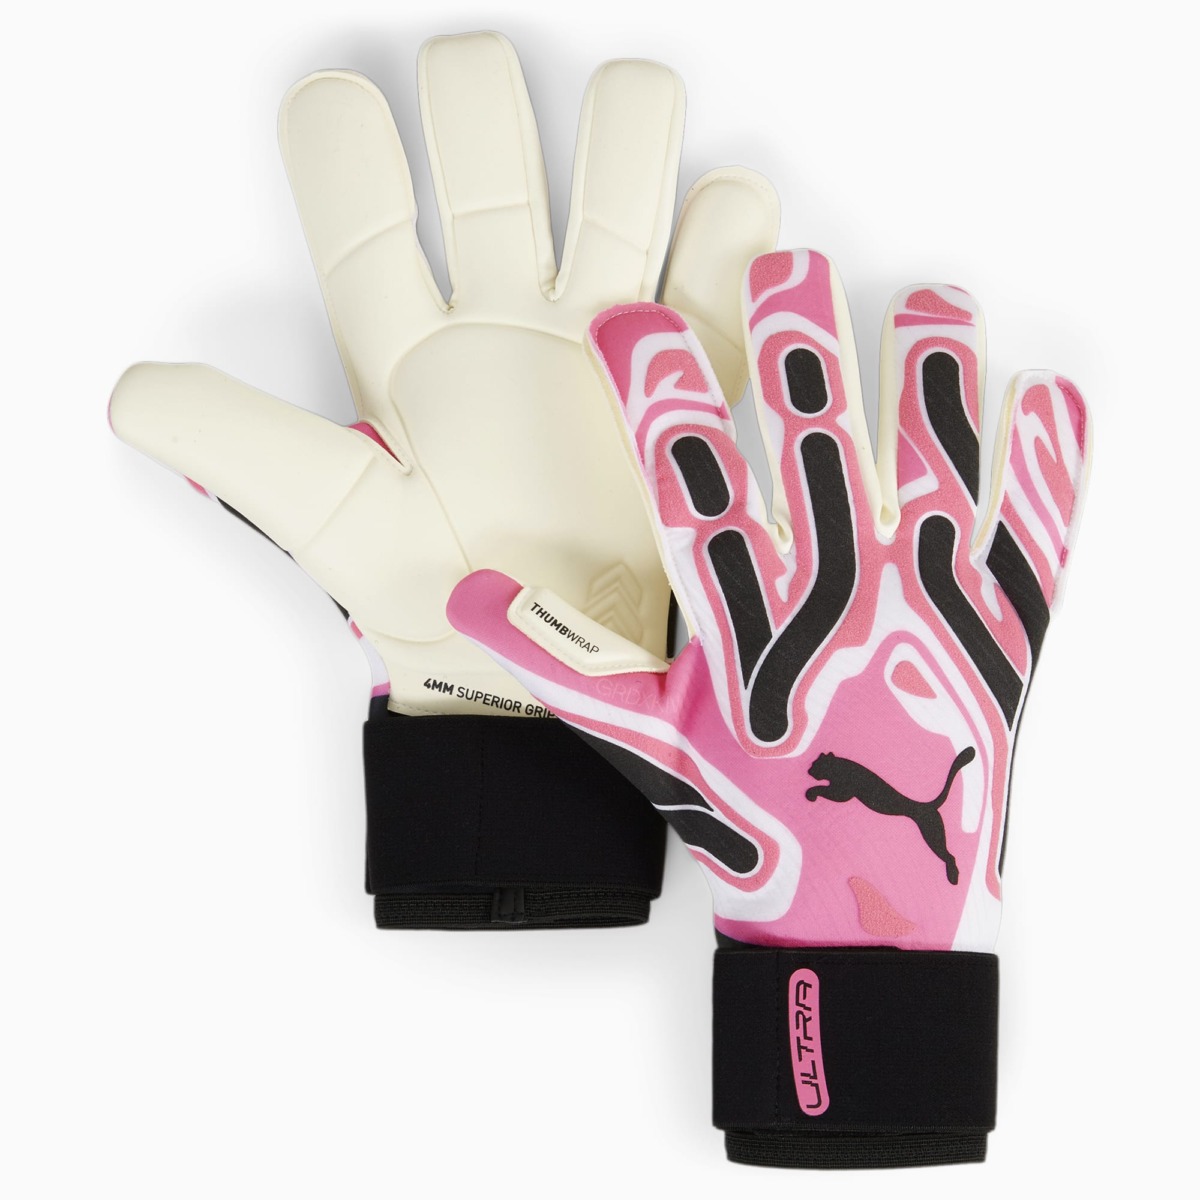 Goalkeeper Gloves in Pink - Puma Woman - Puma GOOFASH